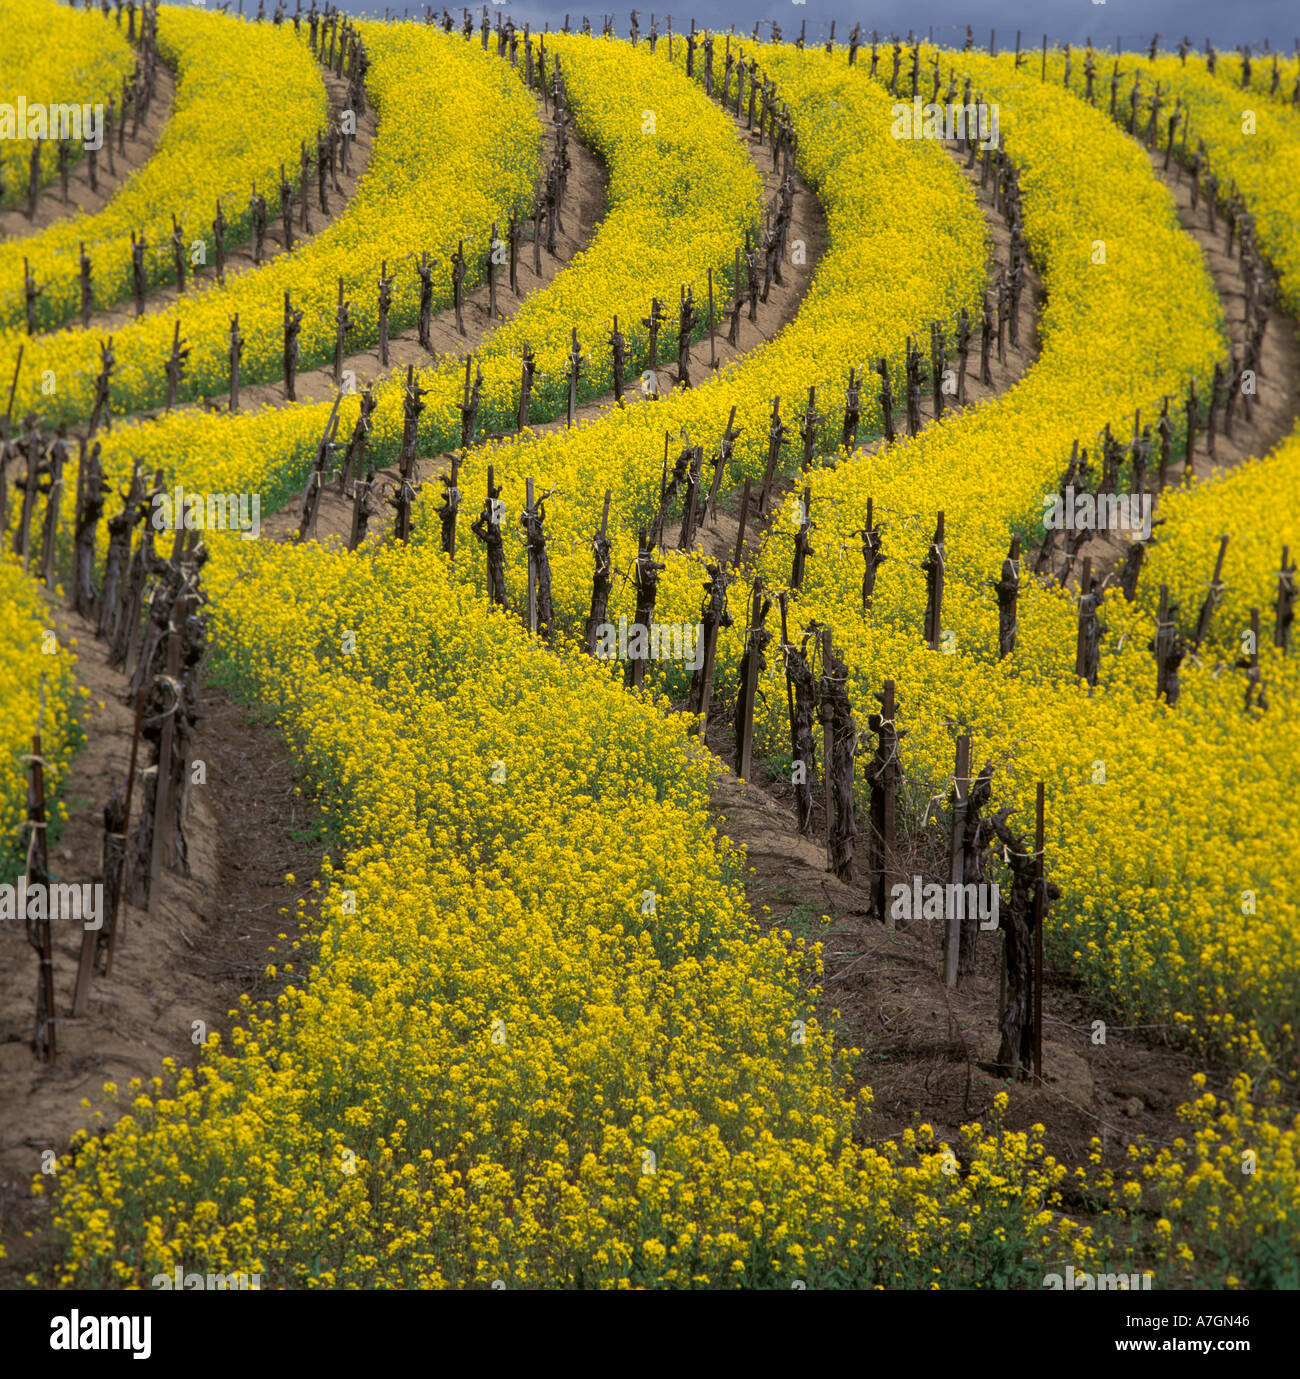 USA, California, Napa Valley, Los Carneros Ava. Springtime bloom of mustard between rows of grapevines. Stock Photo